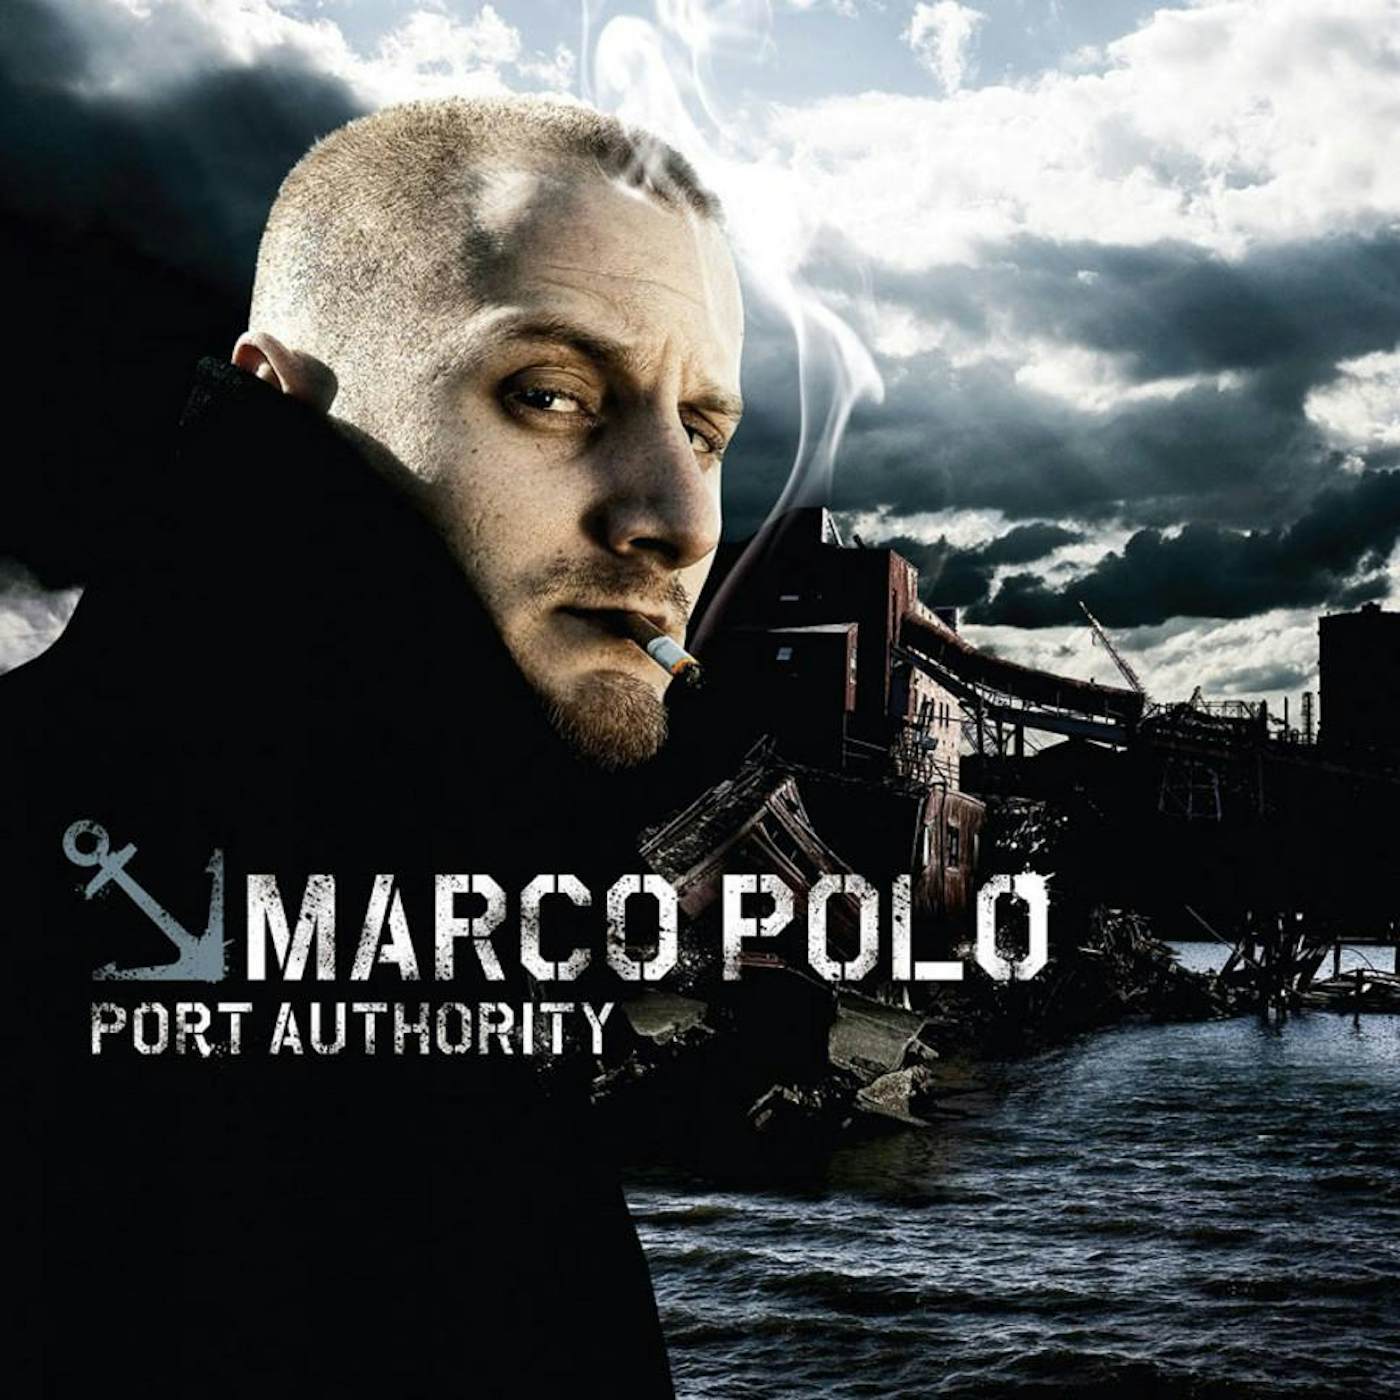 Marco Polo PORT AUTHORITY: REMASTERED REISSUE Vinyl Record